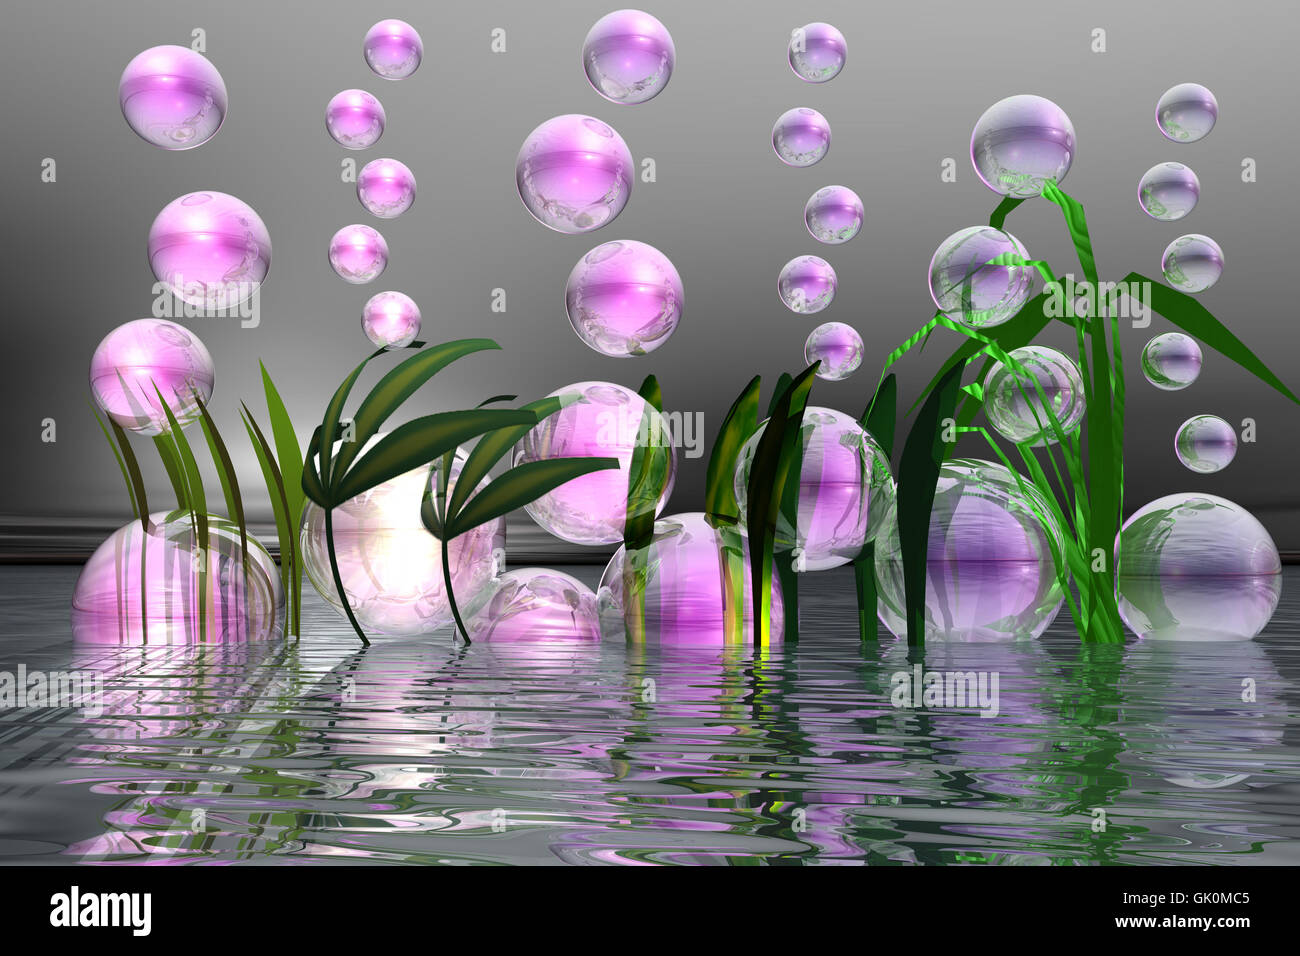 purple bubbles Stock Photo